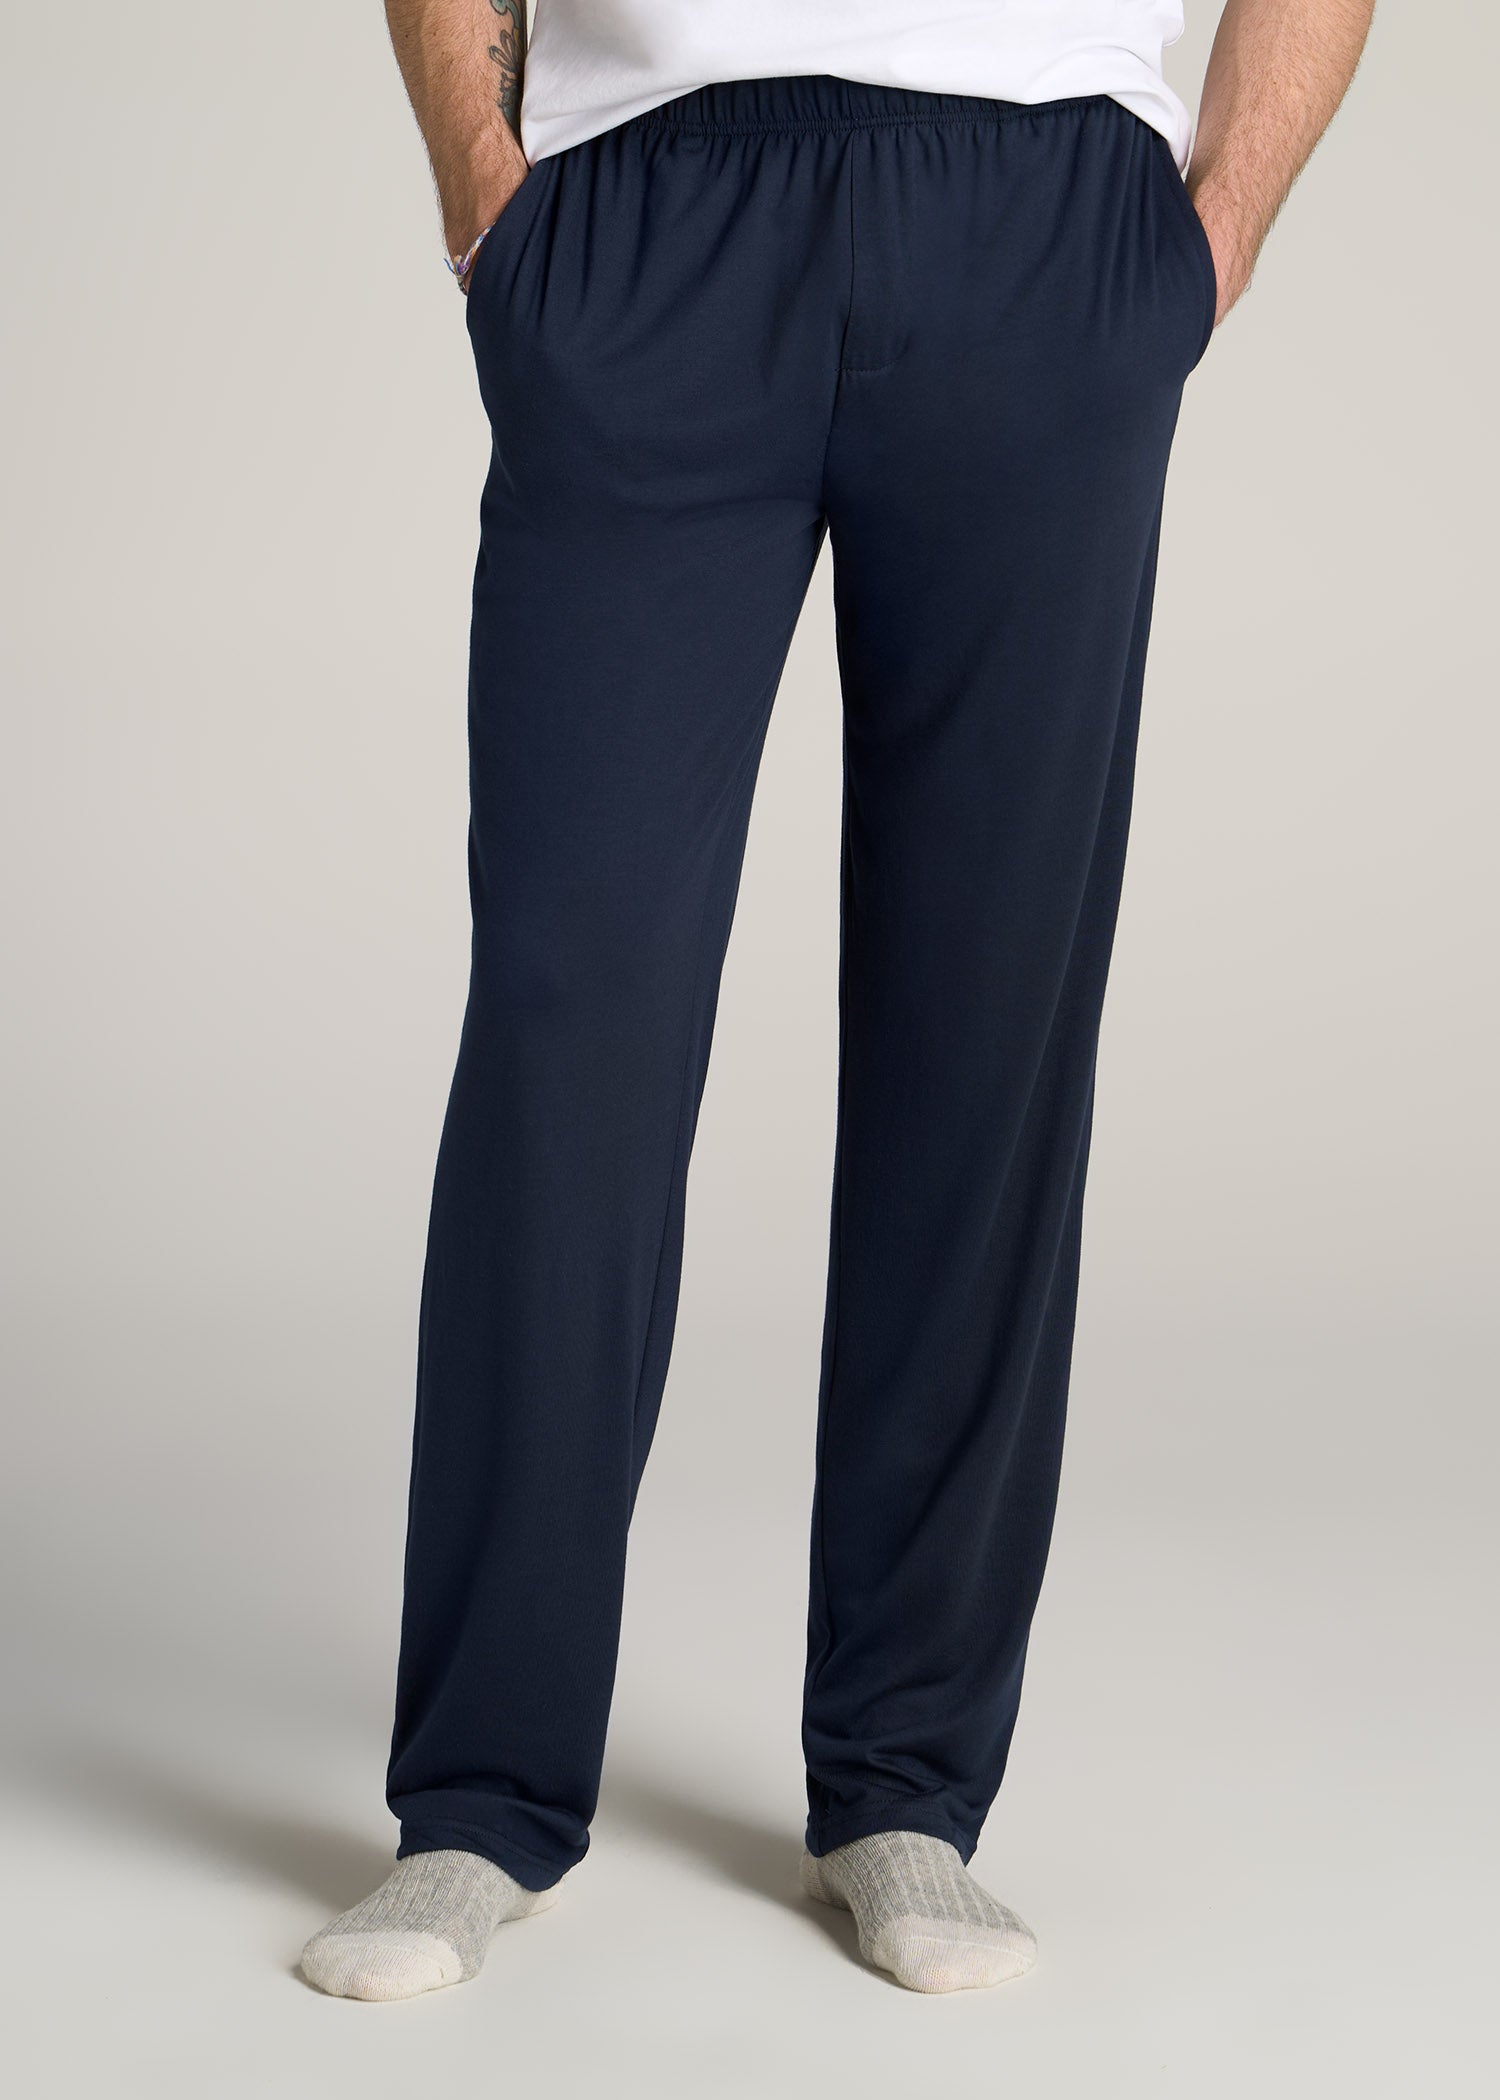 Medium Tall Pajama Pants: Navy Tall Lounge Pant For Men – American